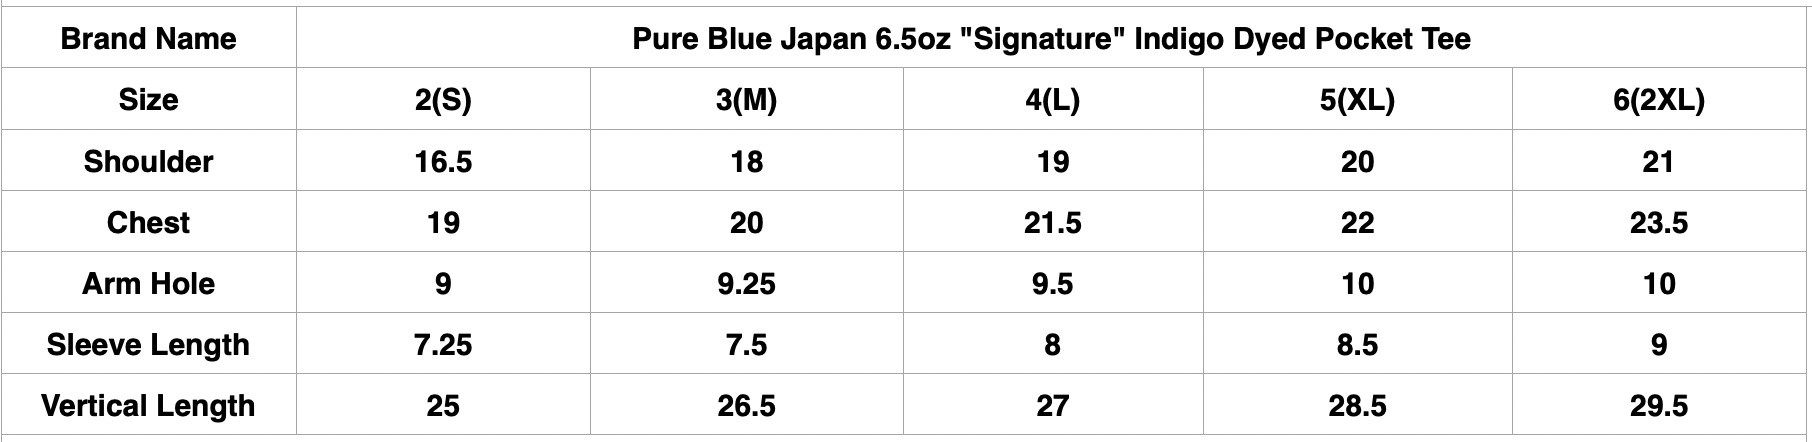 Pure Blue Japan 6.5oz "Signature" Indigo Dyed Pocket Tee (Genuine Indigo)